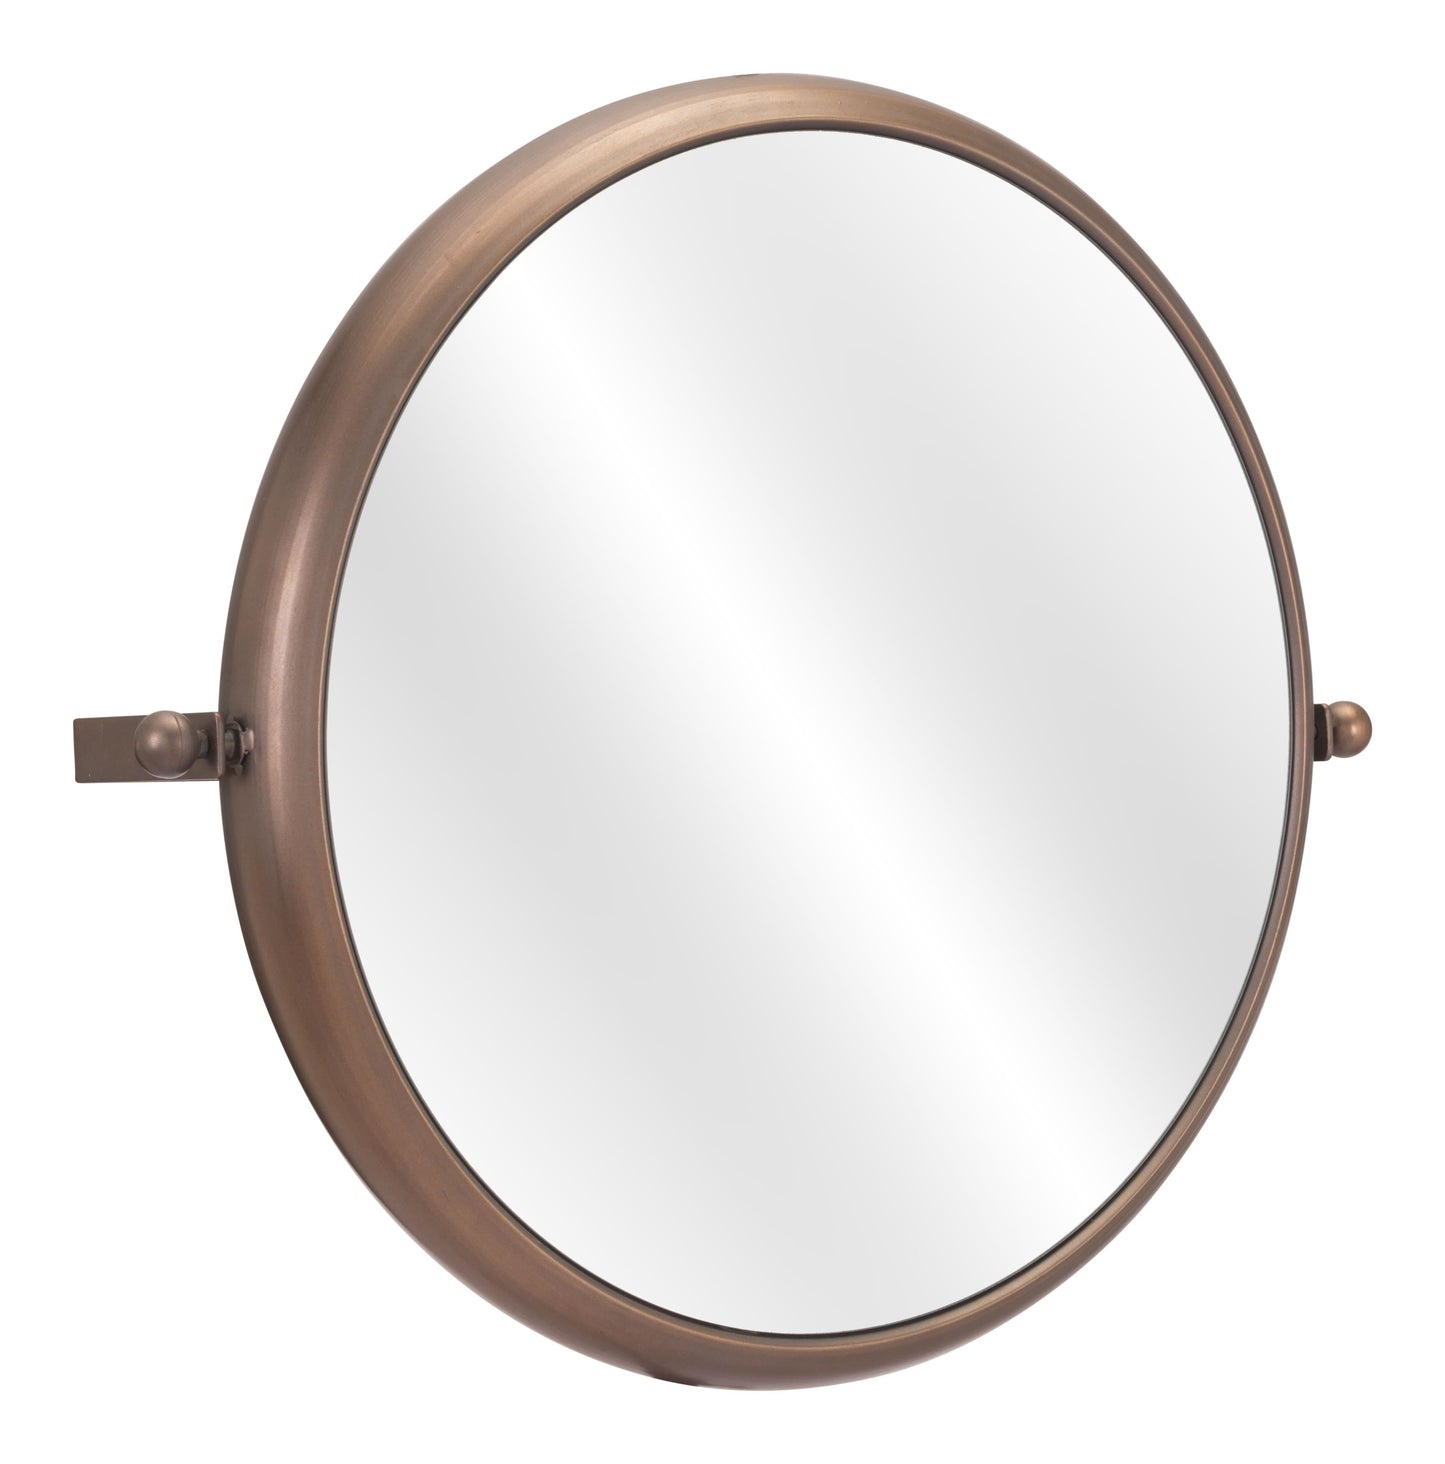 Zuo Rand Mirror (A12233)